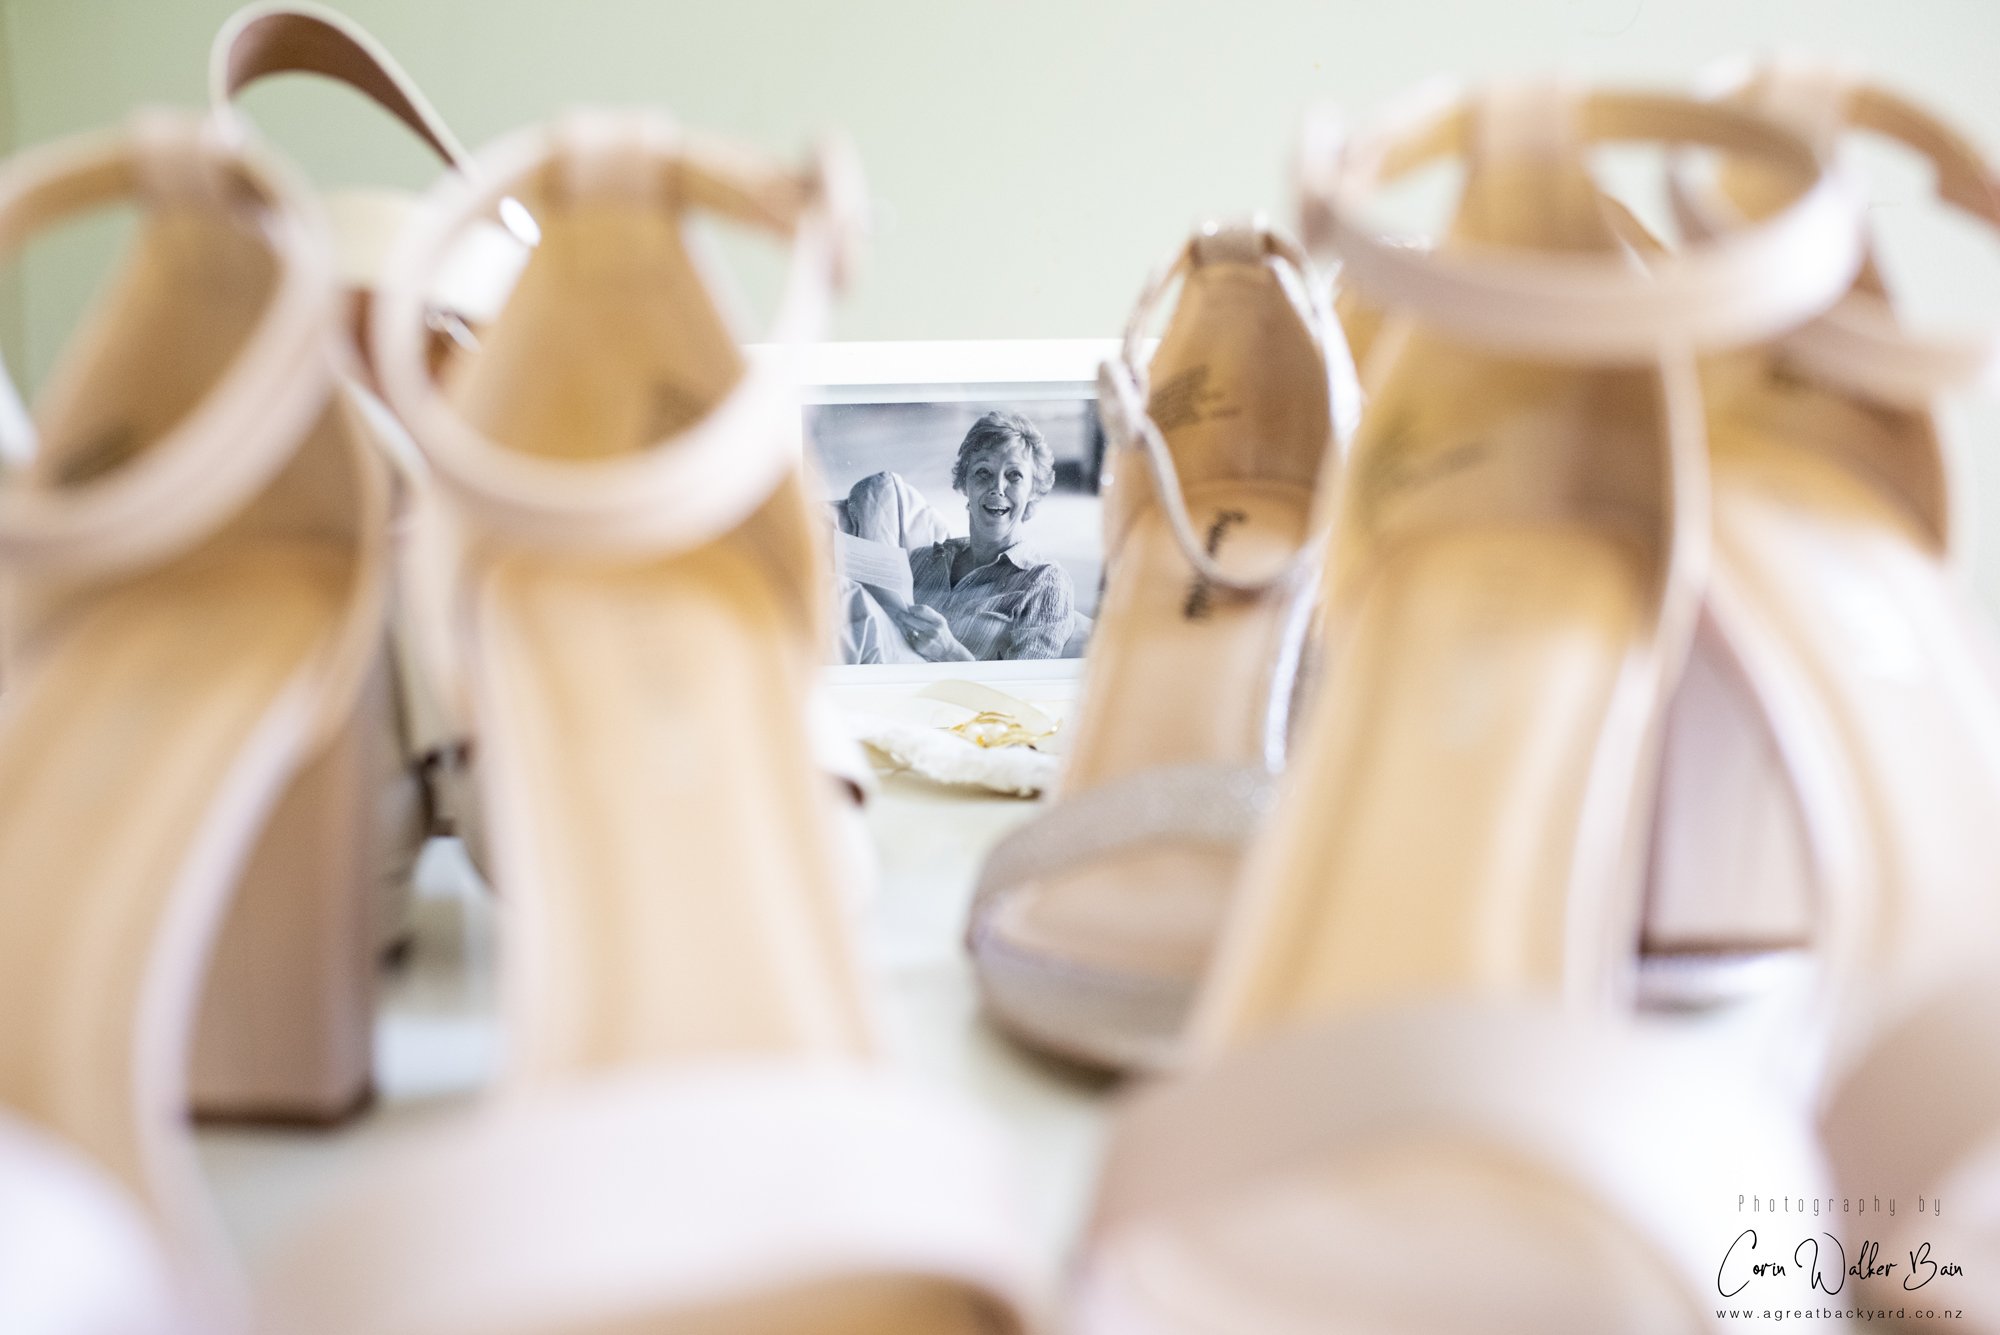 Wedding high heels and framed photo of Mum